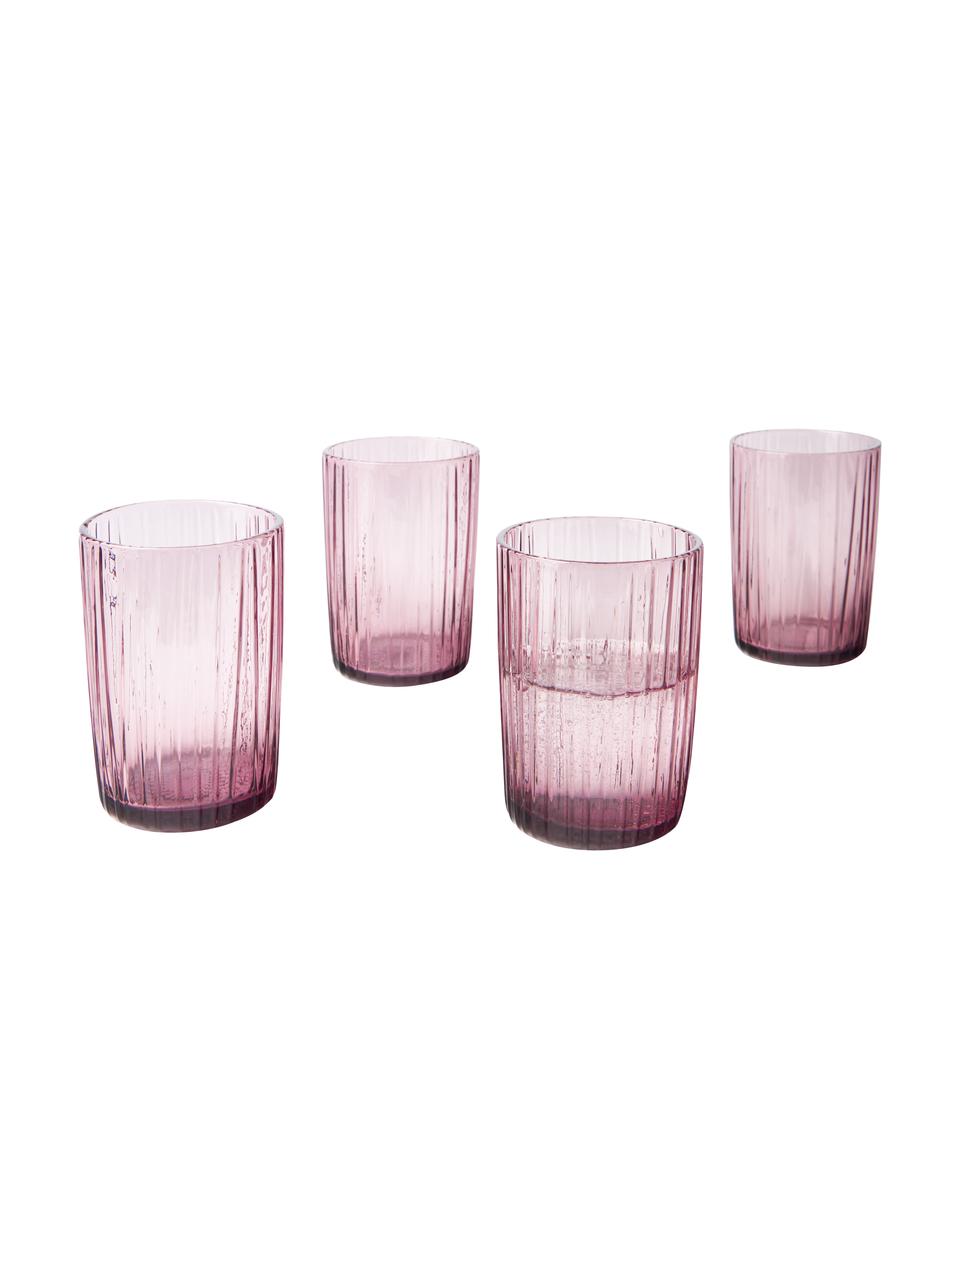 Bicchiere acqua rosa con superficie scanalata Kusintha 4 pz, Vetro, Rosa trasparente, Ø 7 x Alt. 10 cm